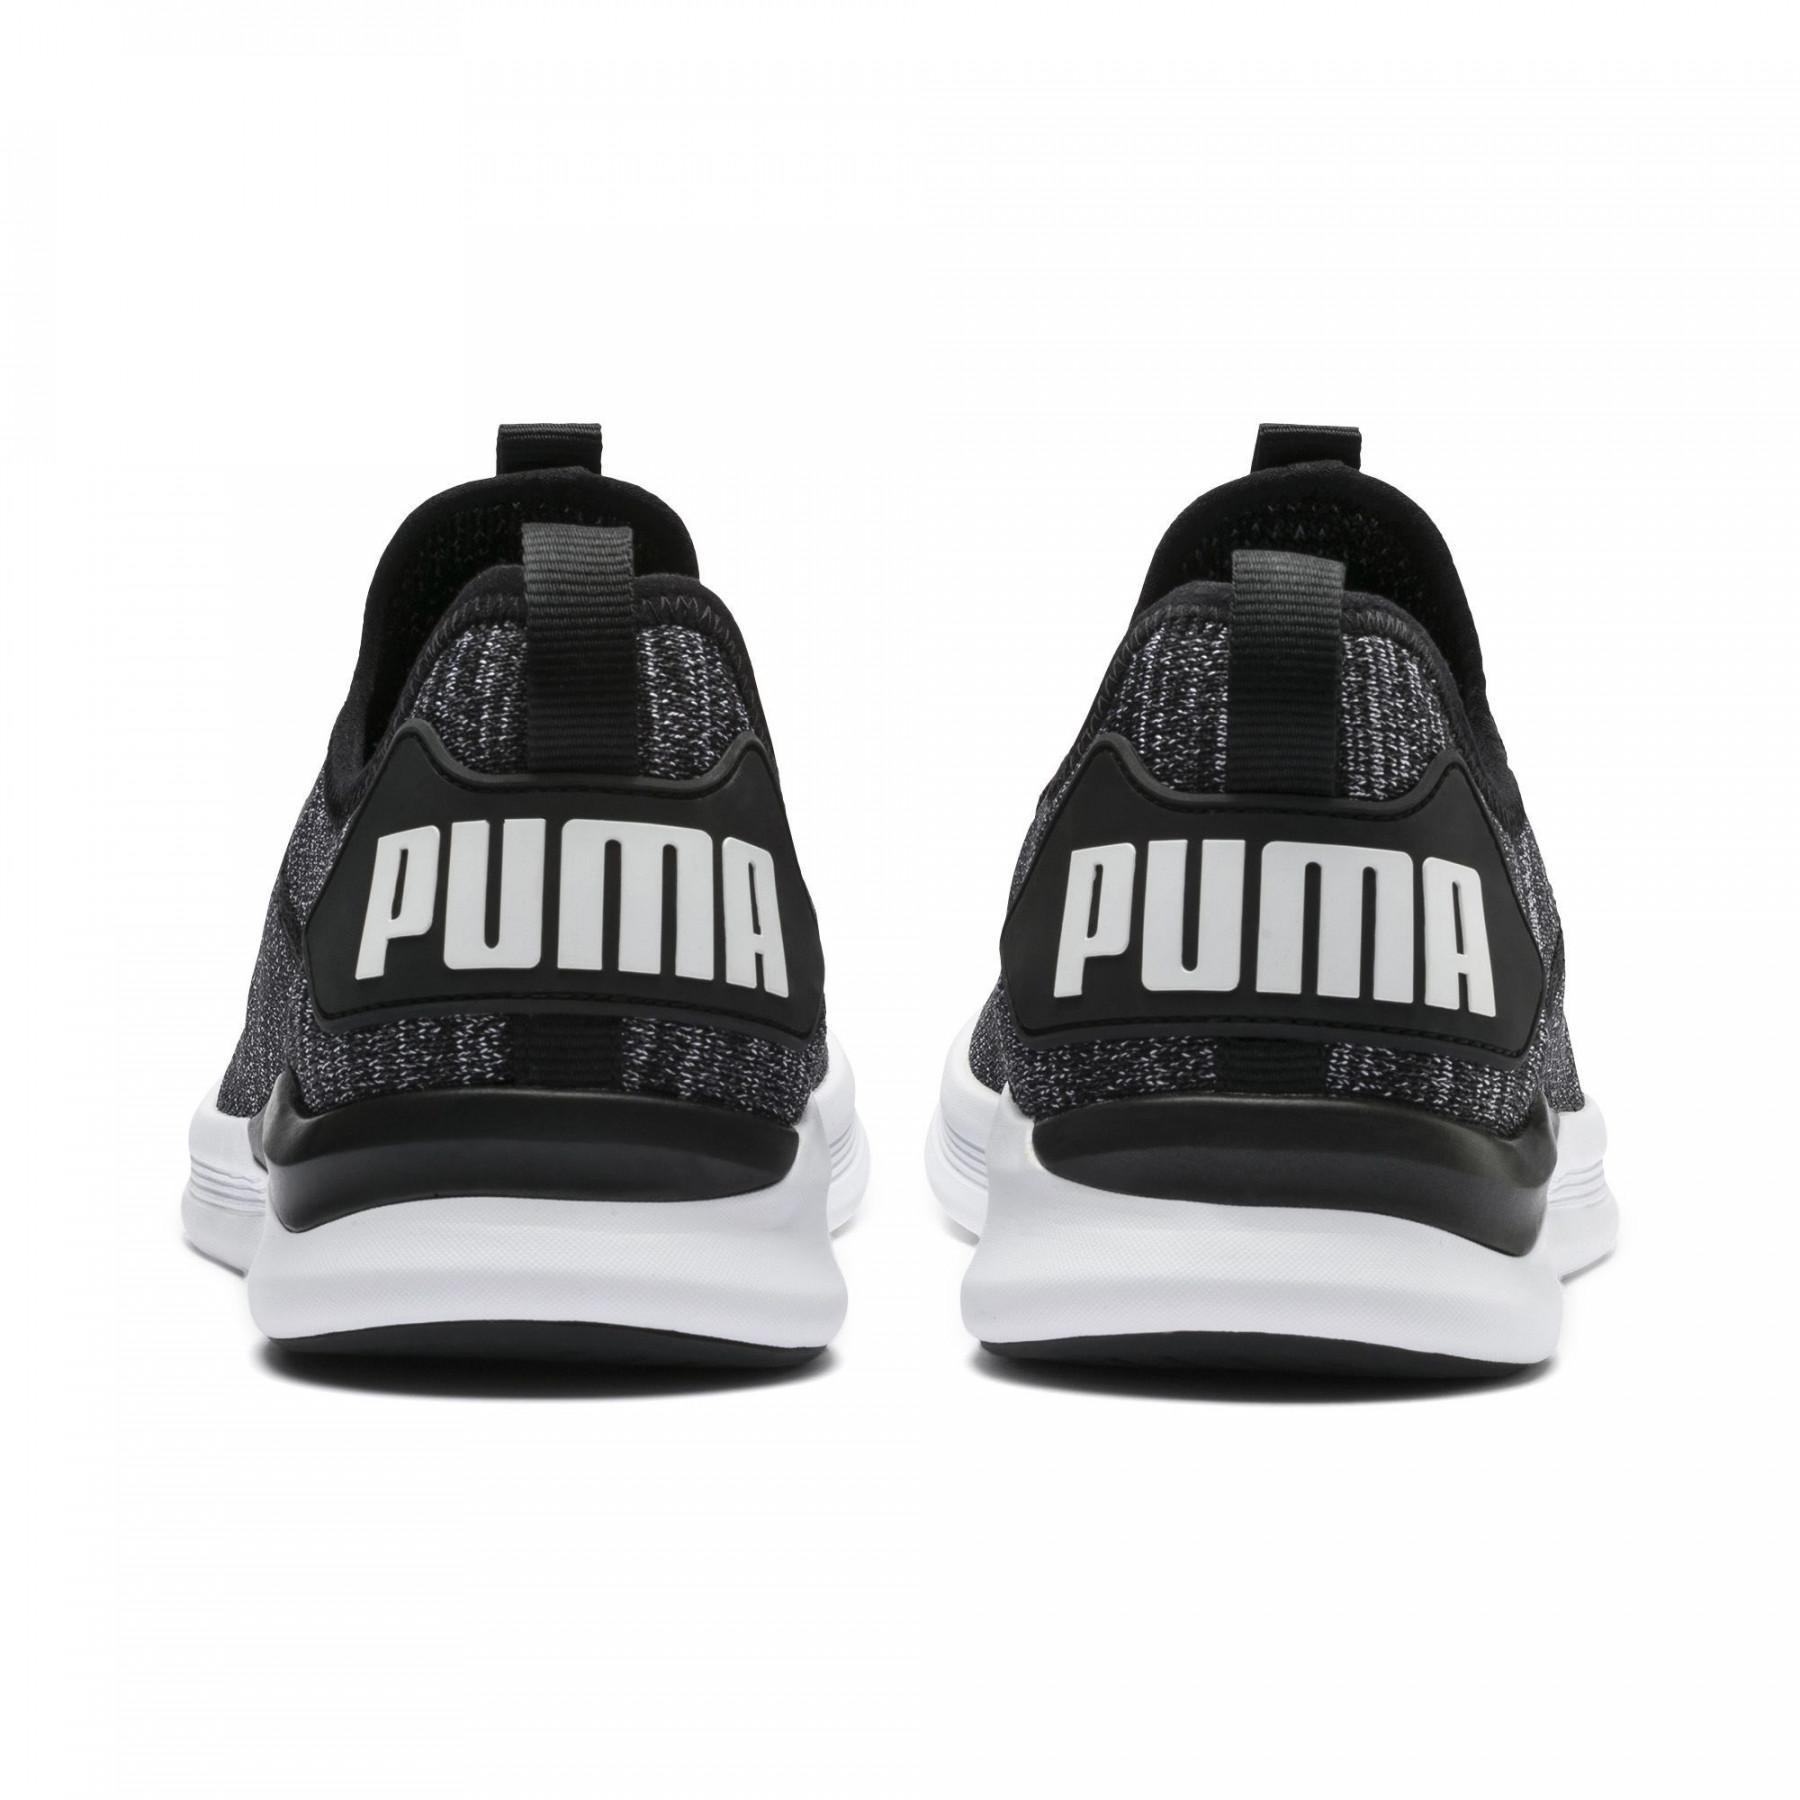 Chaussures de running Puma Ignite Flash evoKNIT